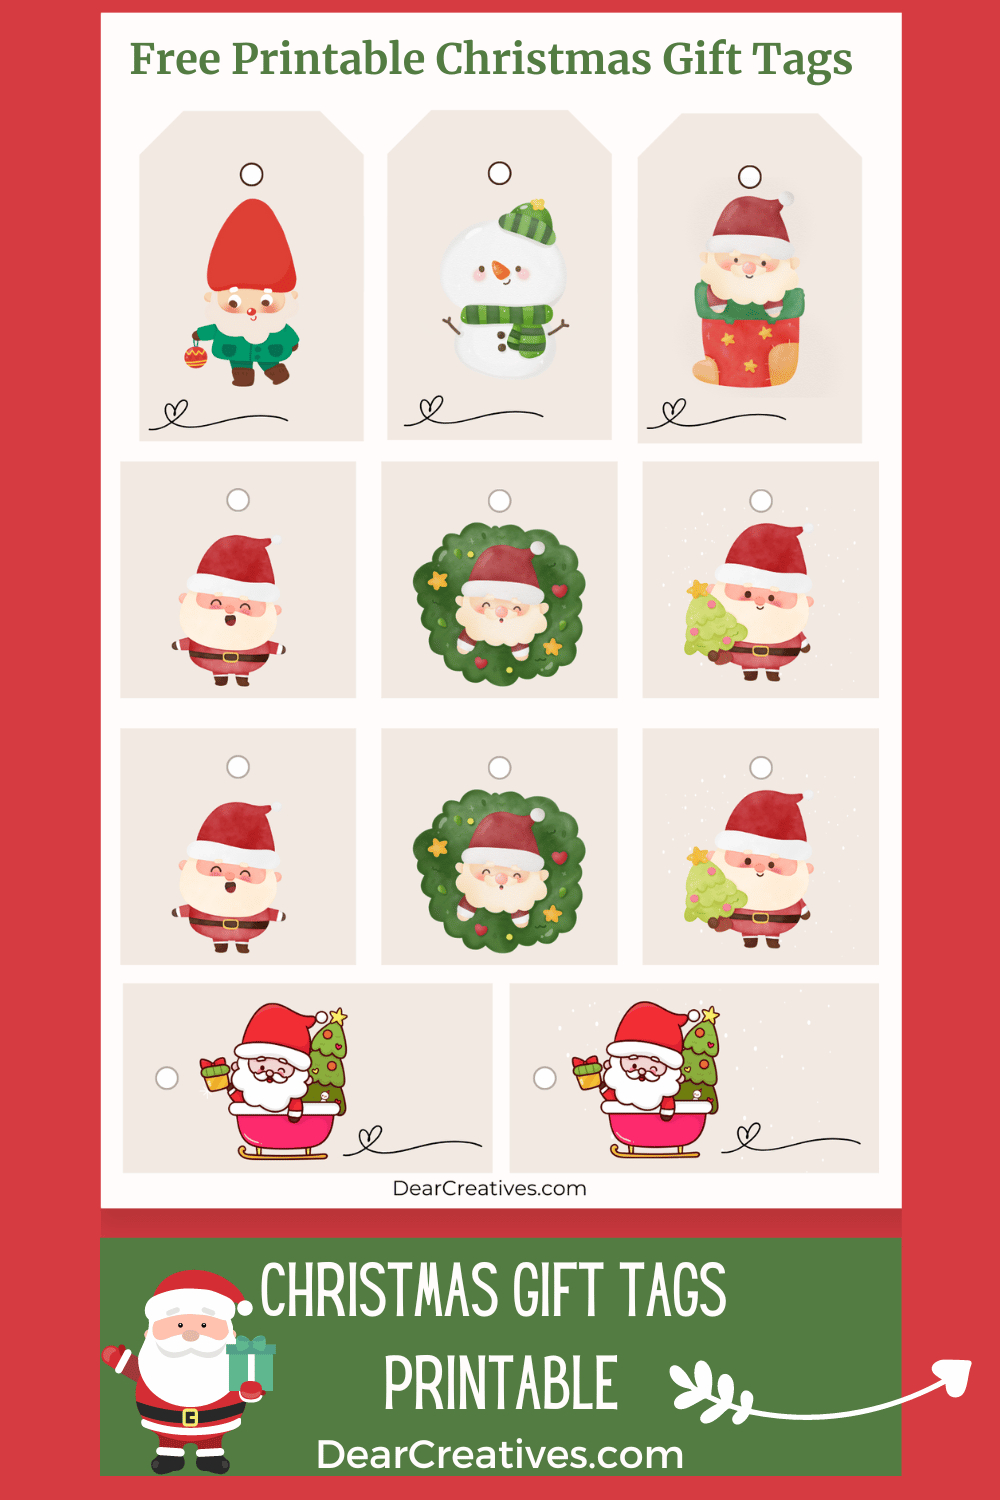 Christmas Gift Tags Printable - Dear Creatives with regard to Christmas Name Tags Free Printable